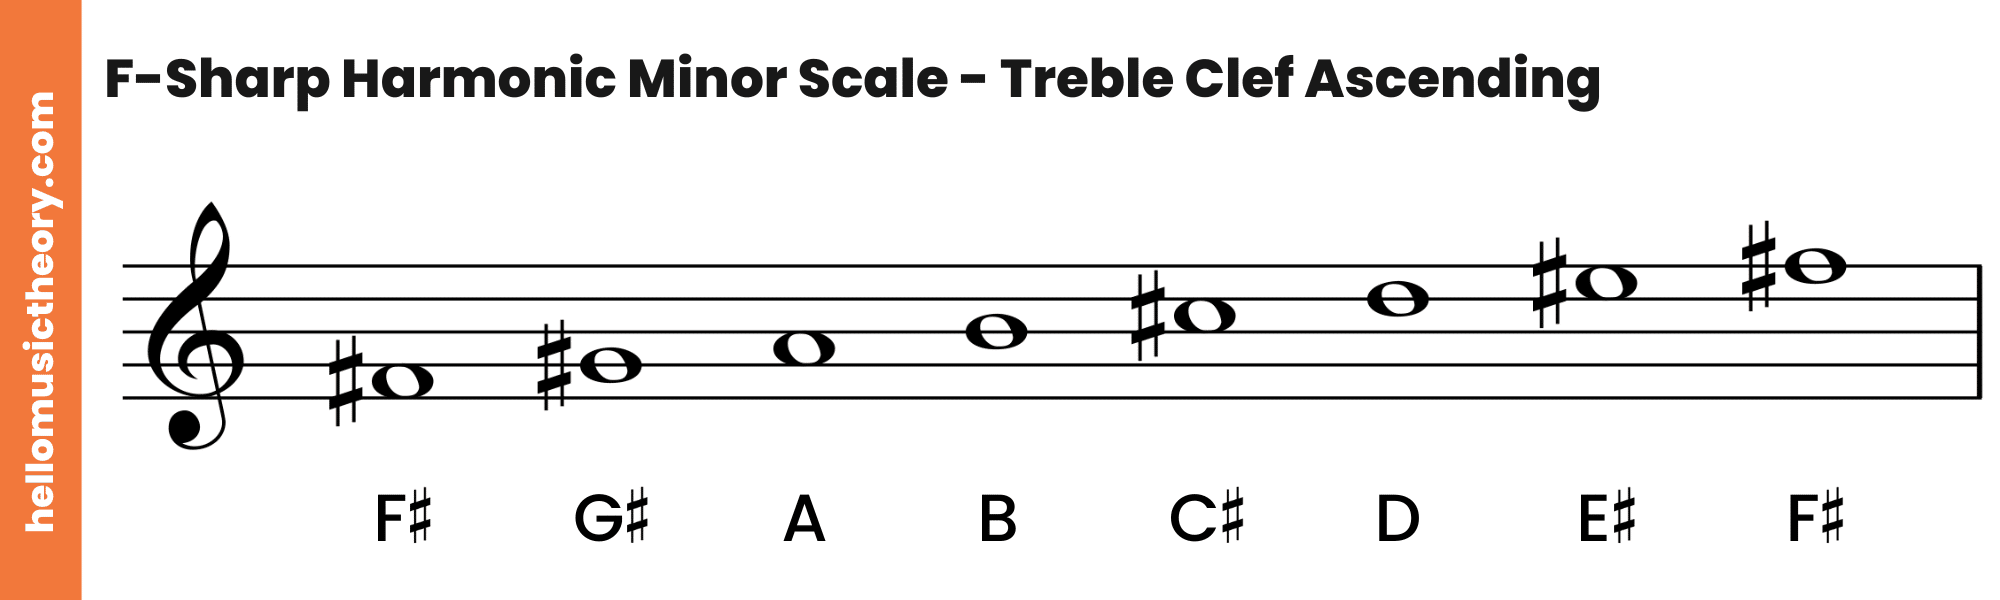 F-Sharp Harmonic Minor Scale Treble Clef Ascending